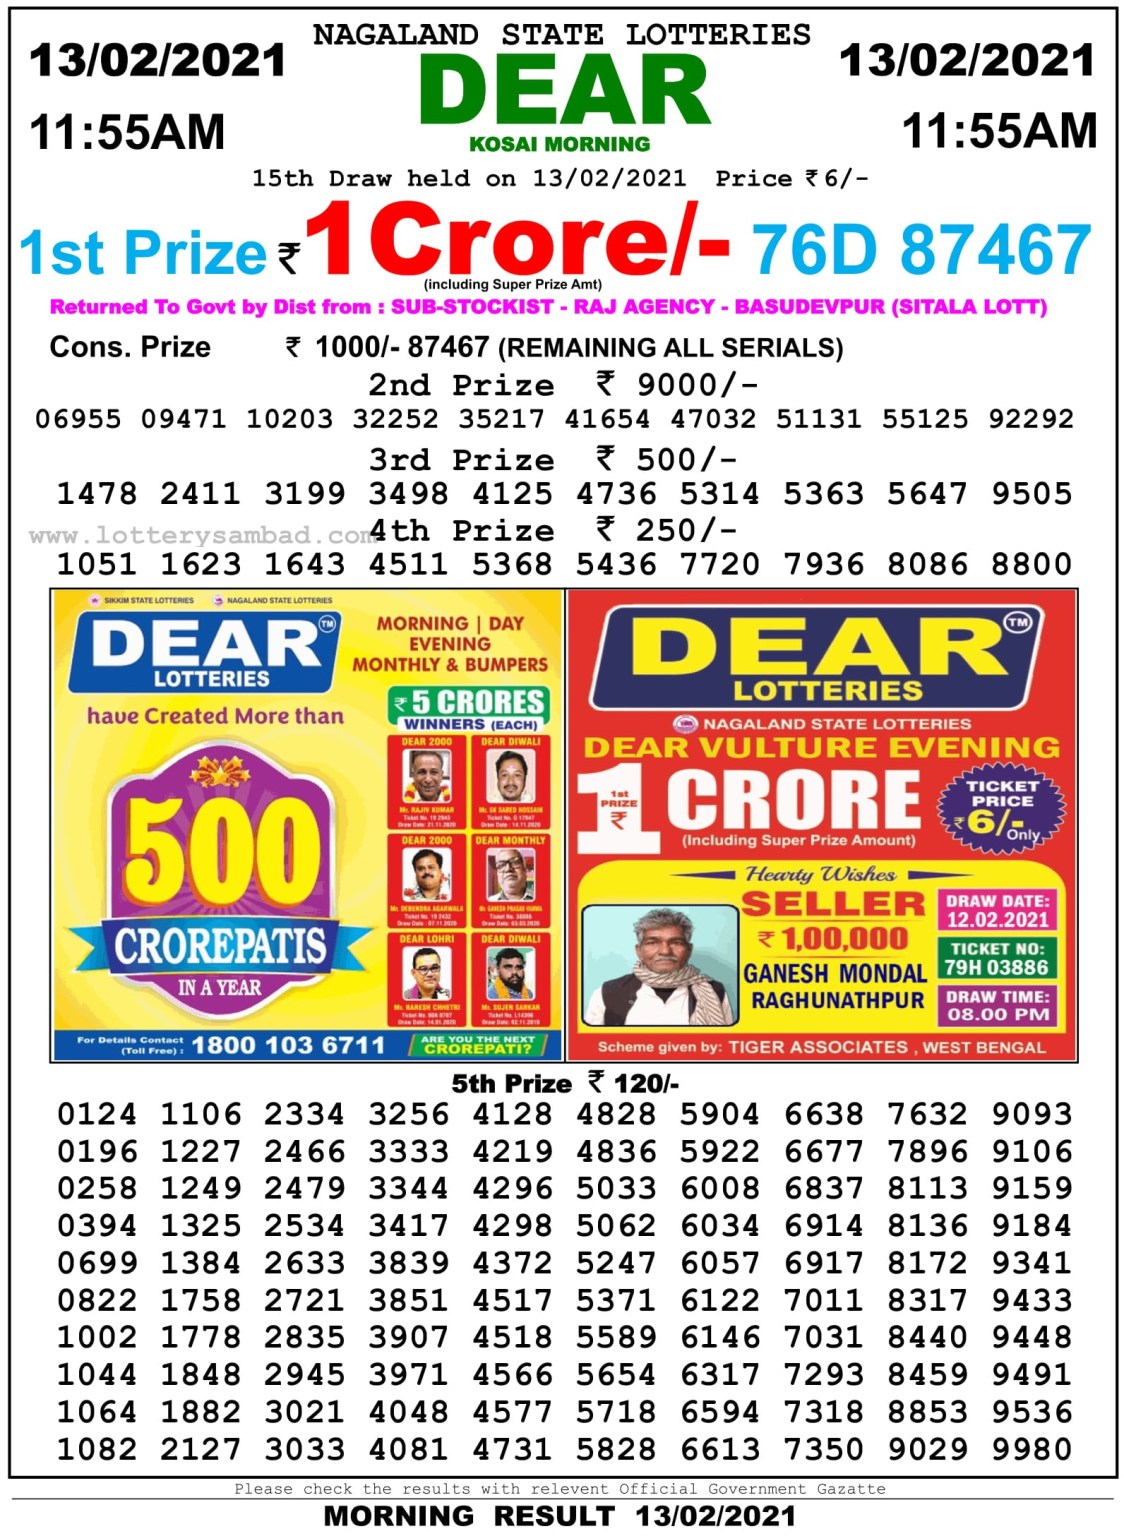 Dear Daily Lottery Result 11.55AM 13 Feb 2021